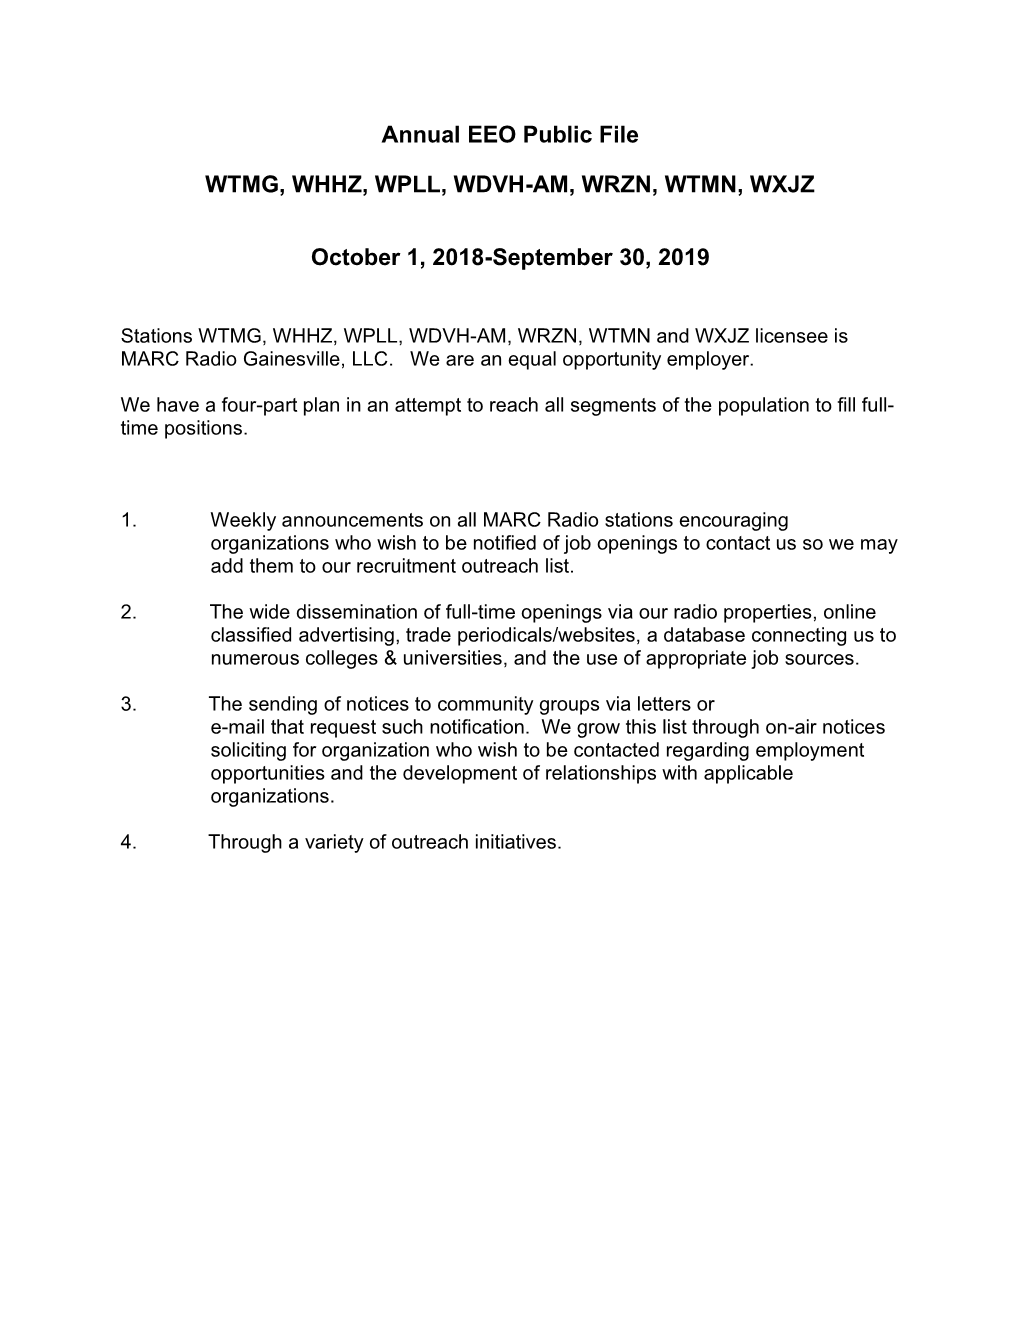 Annual EEO Public File WTMG, WHHZ, WPLL, WDVH-AM, WRZN, WTMN